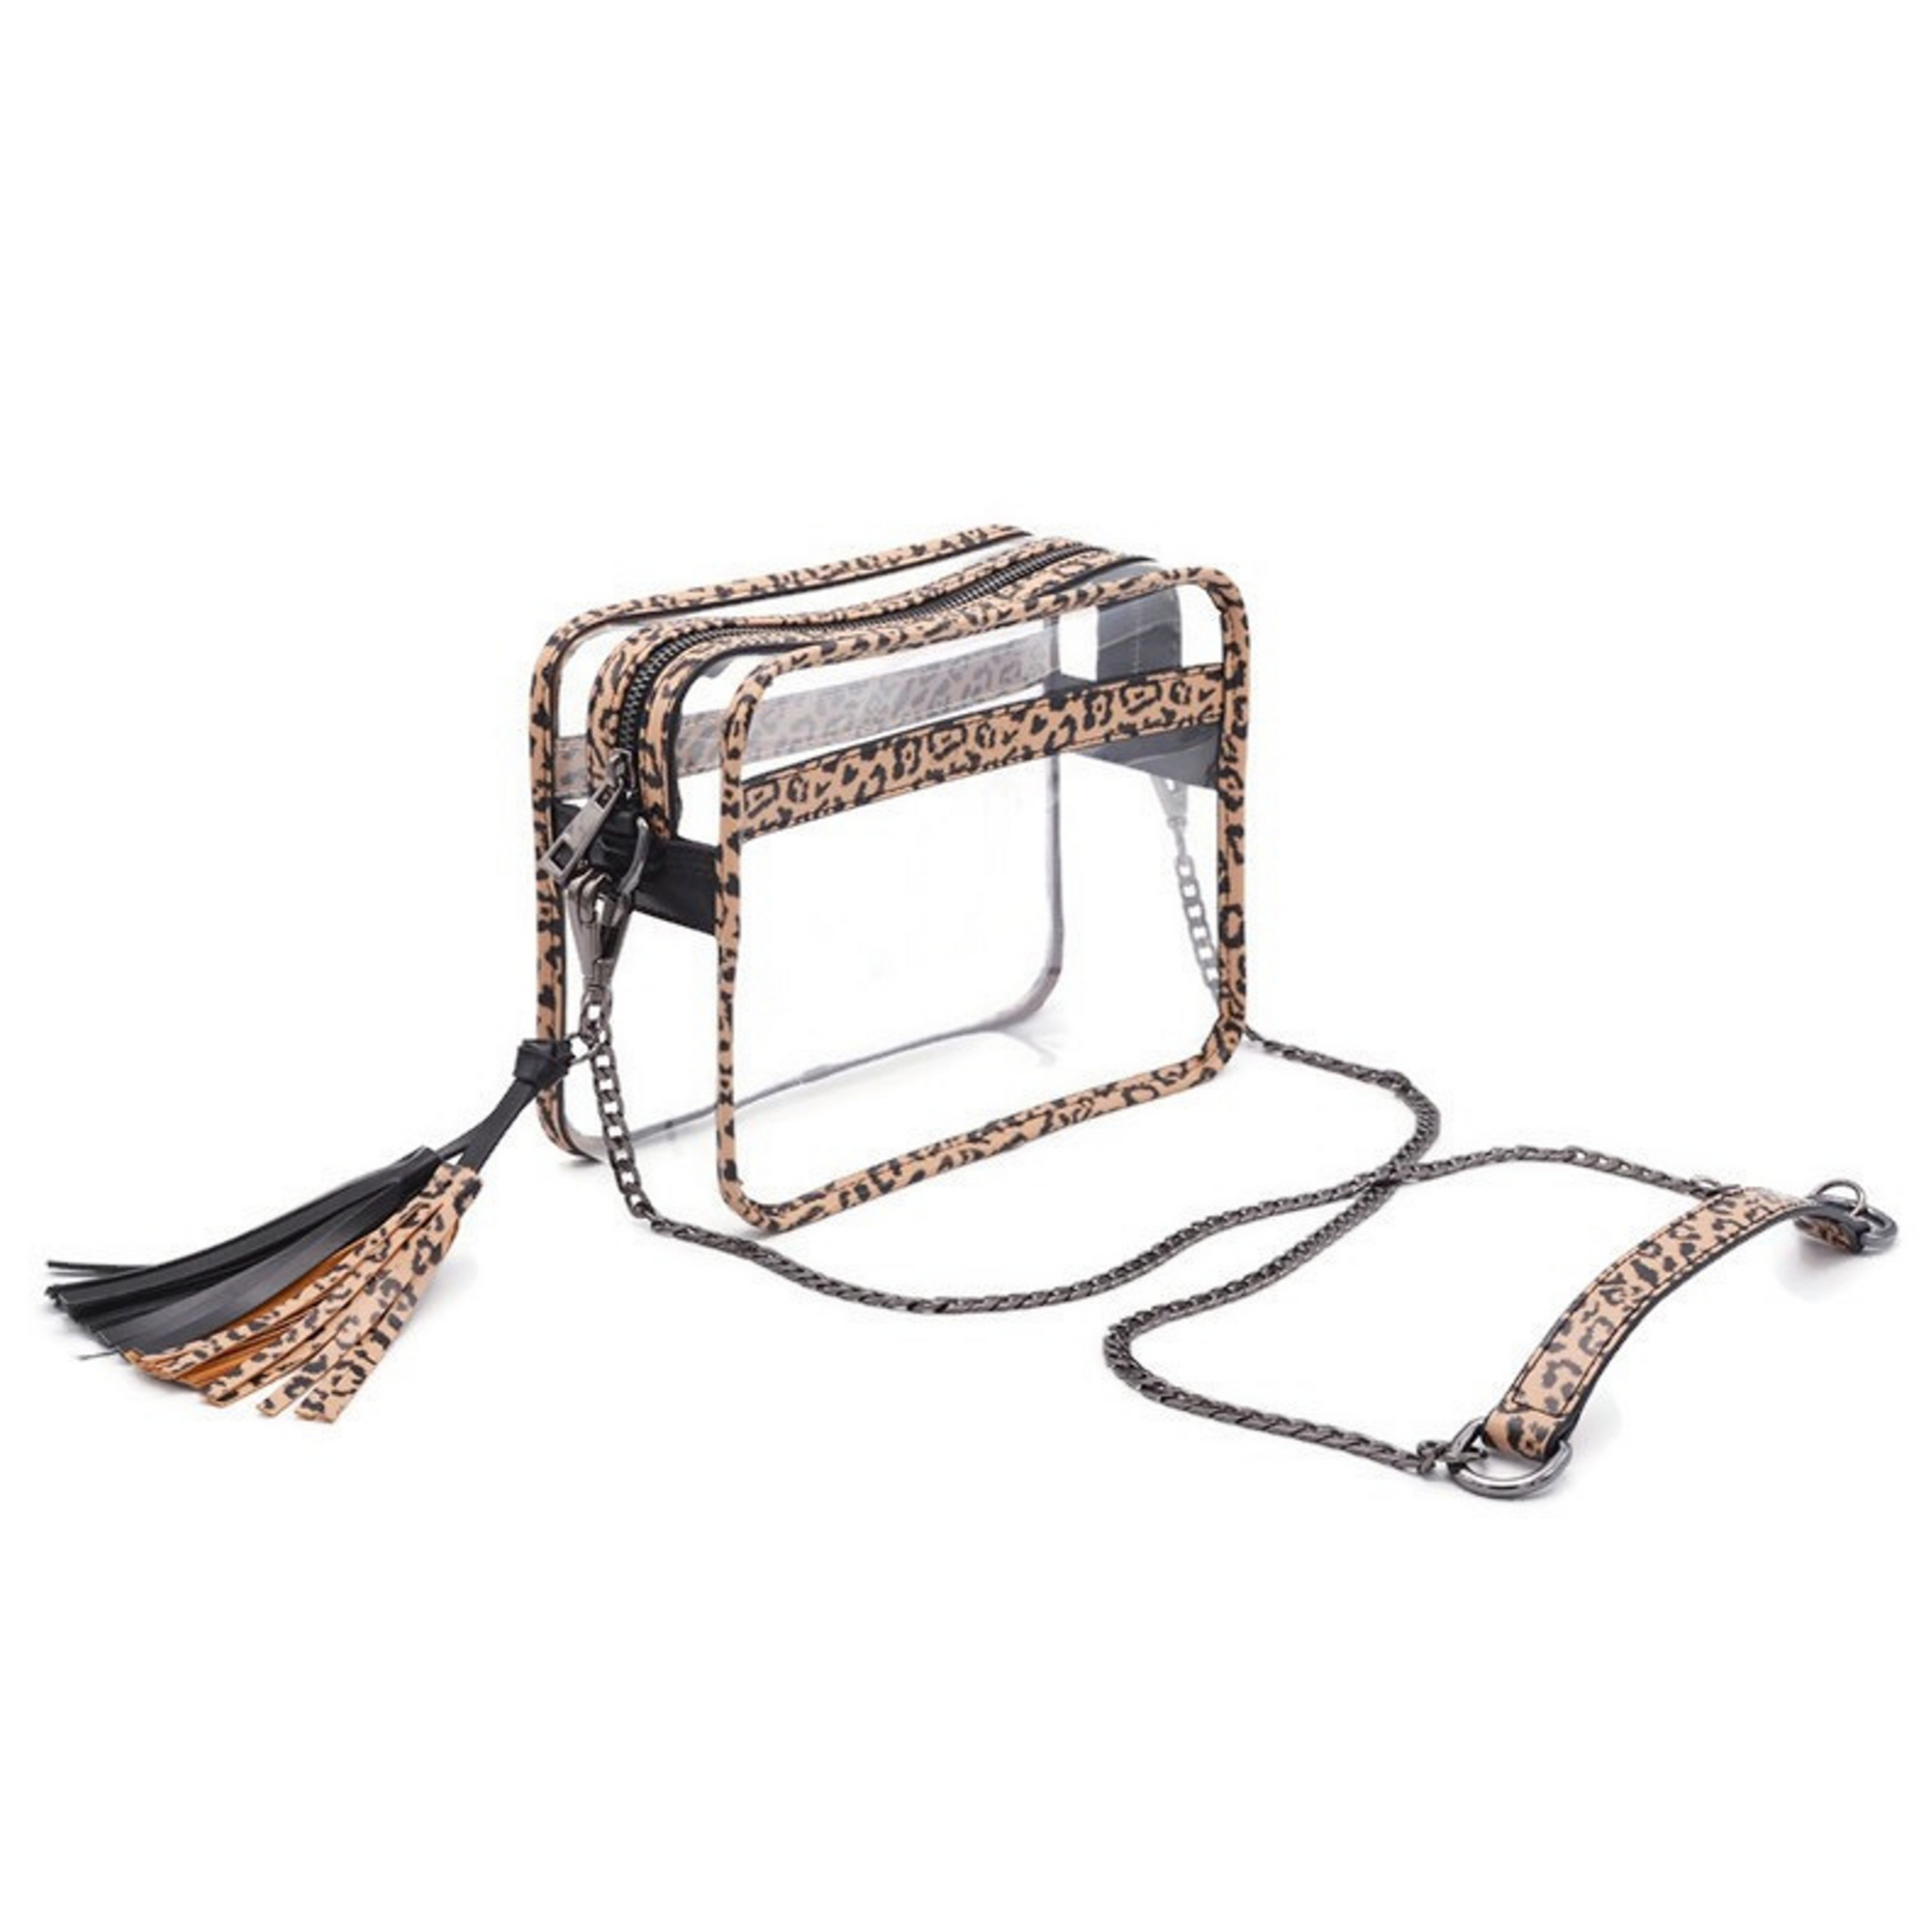 The Basic Bare | Cheetah Cub - POLICY Handbags - policyhandbags.com